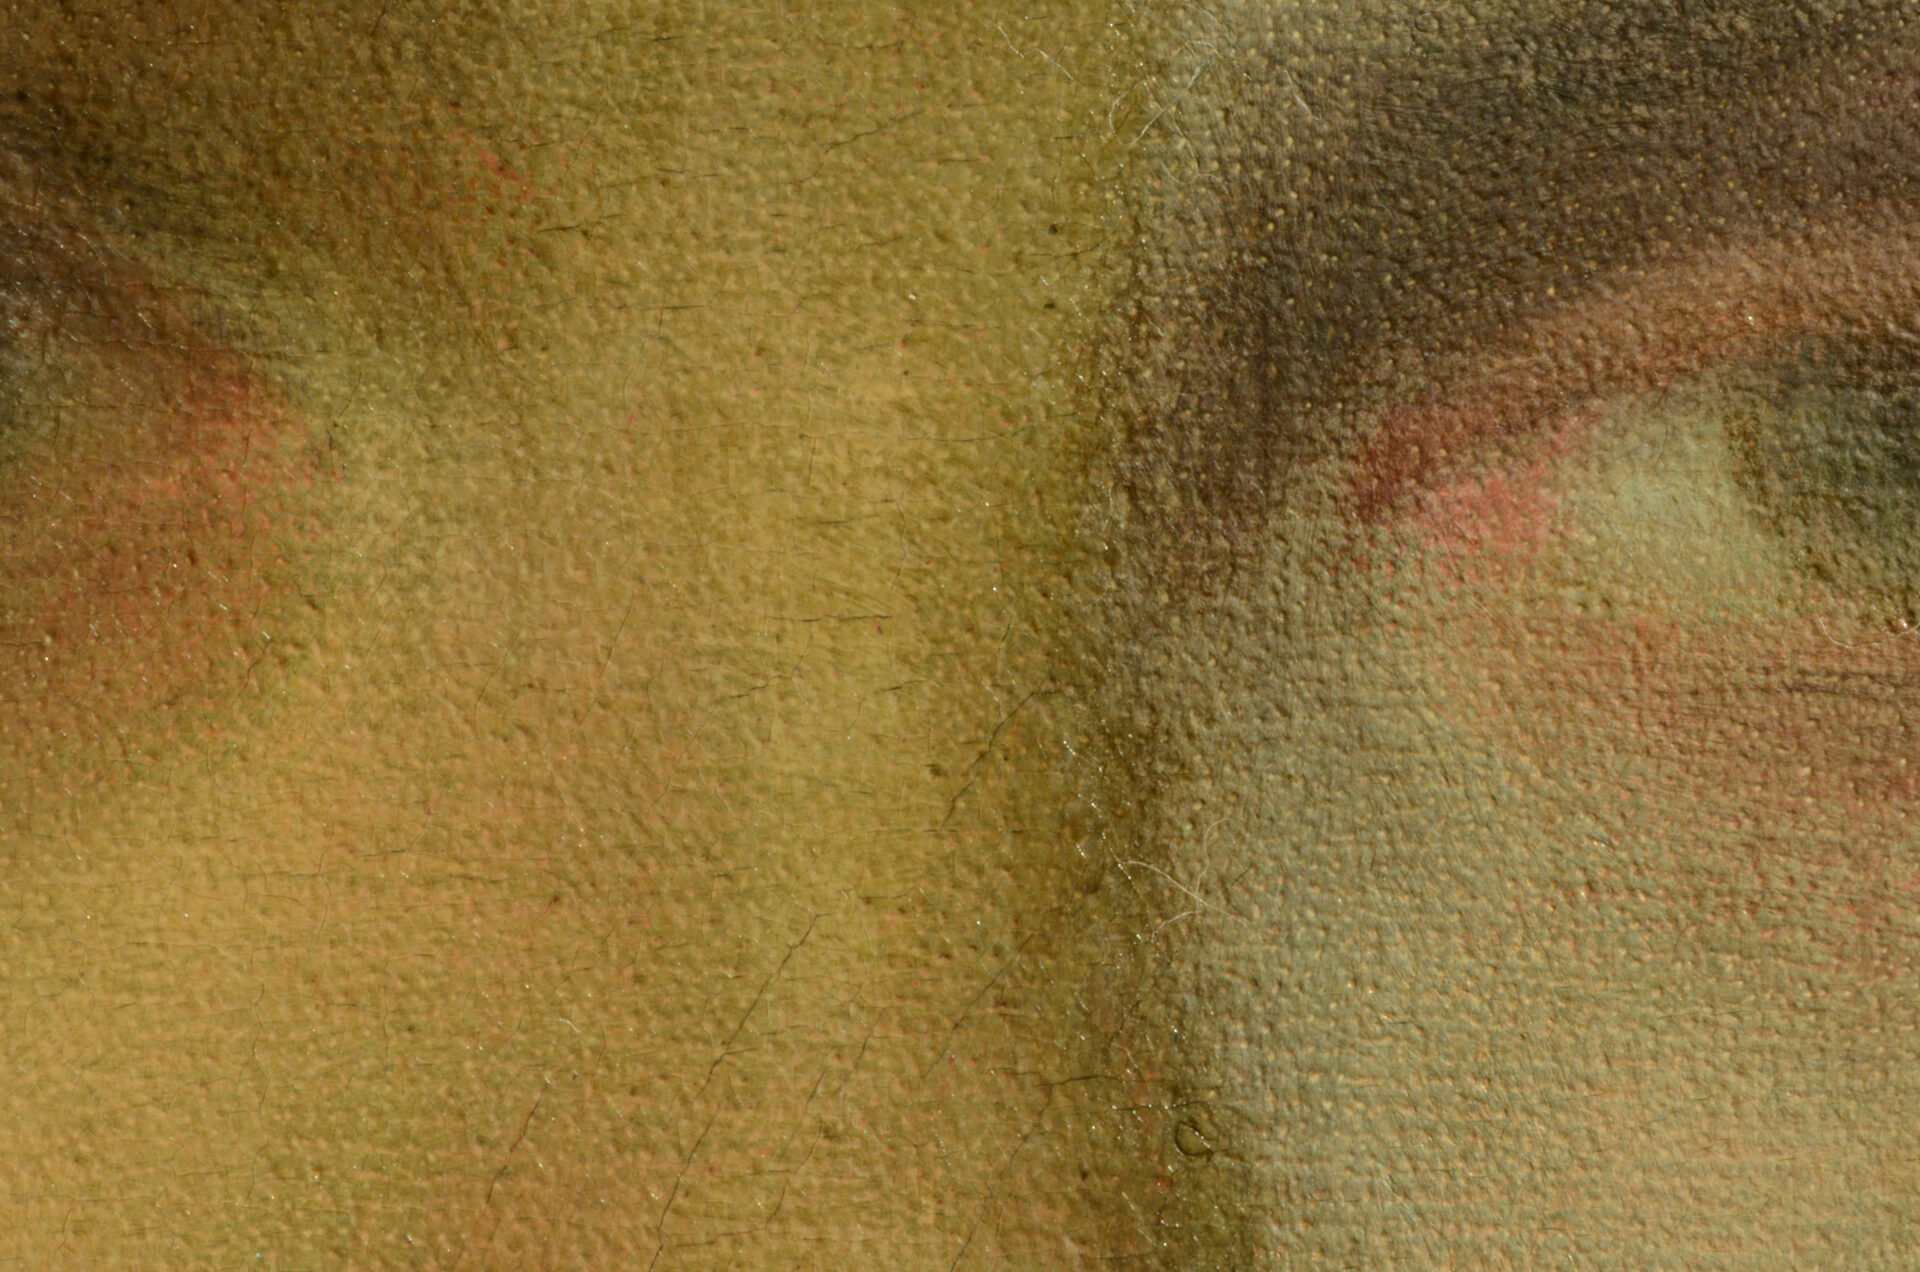 Arnold-böcklin-Fanny-Janauscheck-Detail-Nase-Auge-während-Firnisabnahme